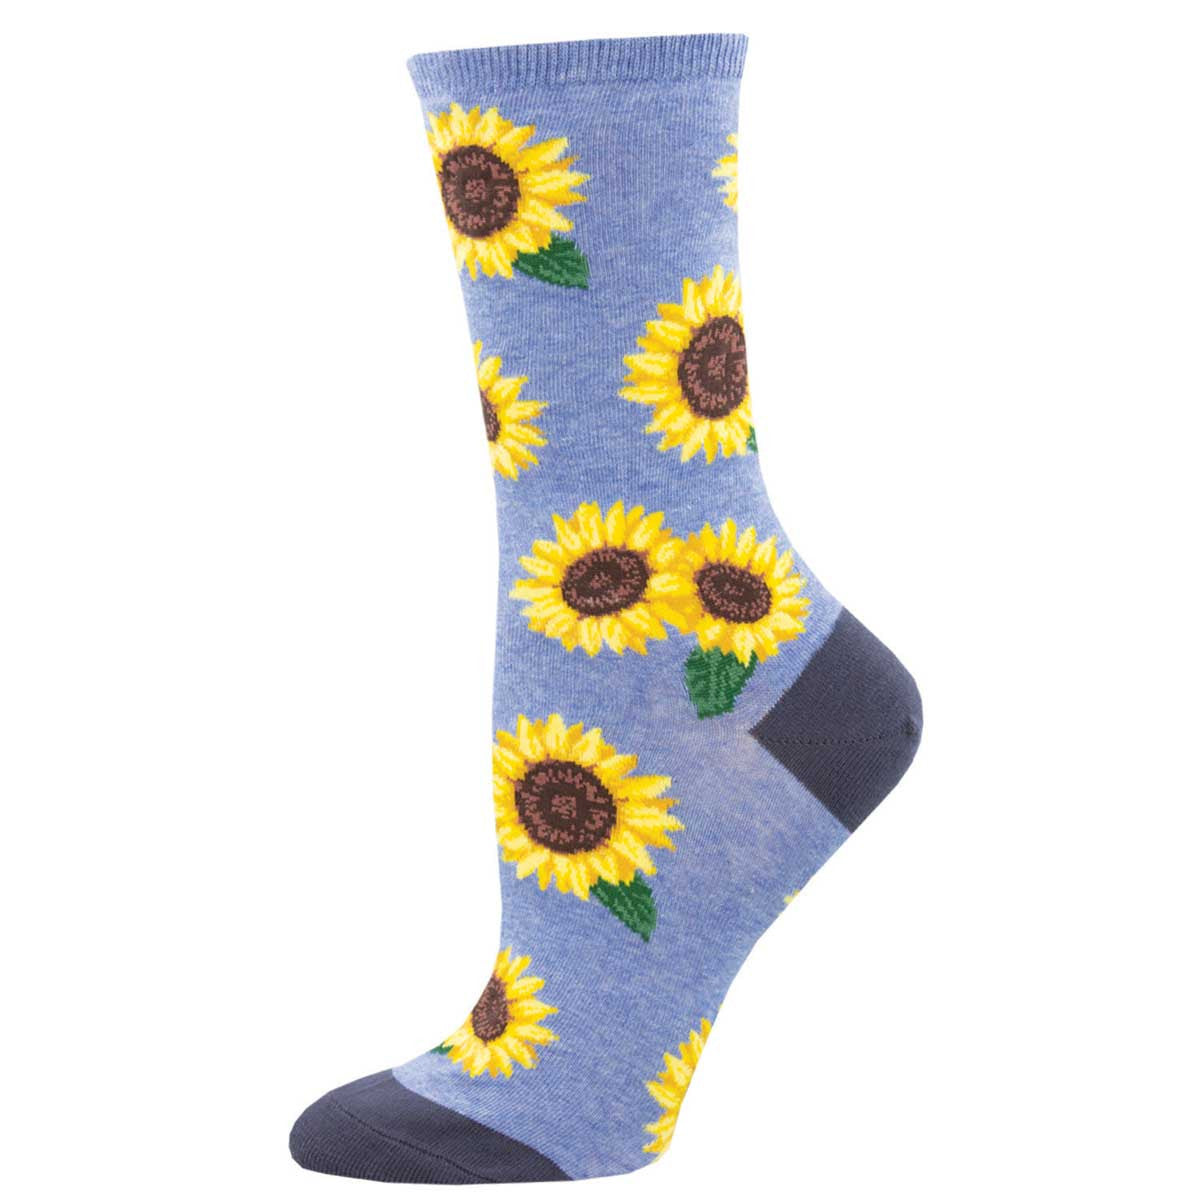 Women's More Blooming Socks Crew (Blue Heather)